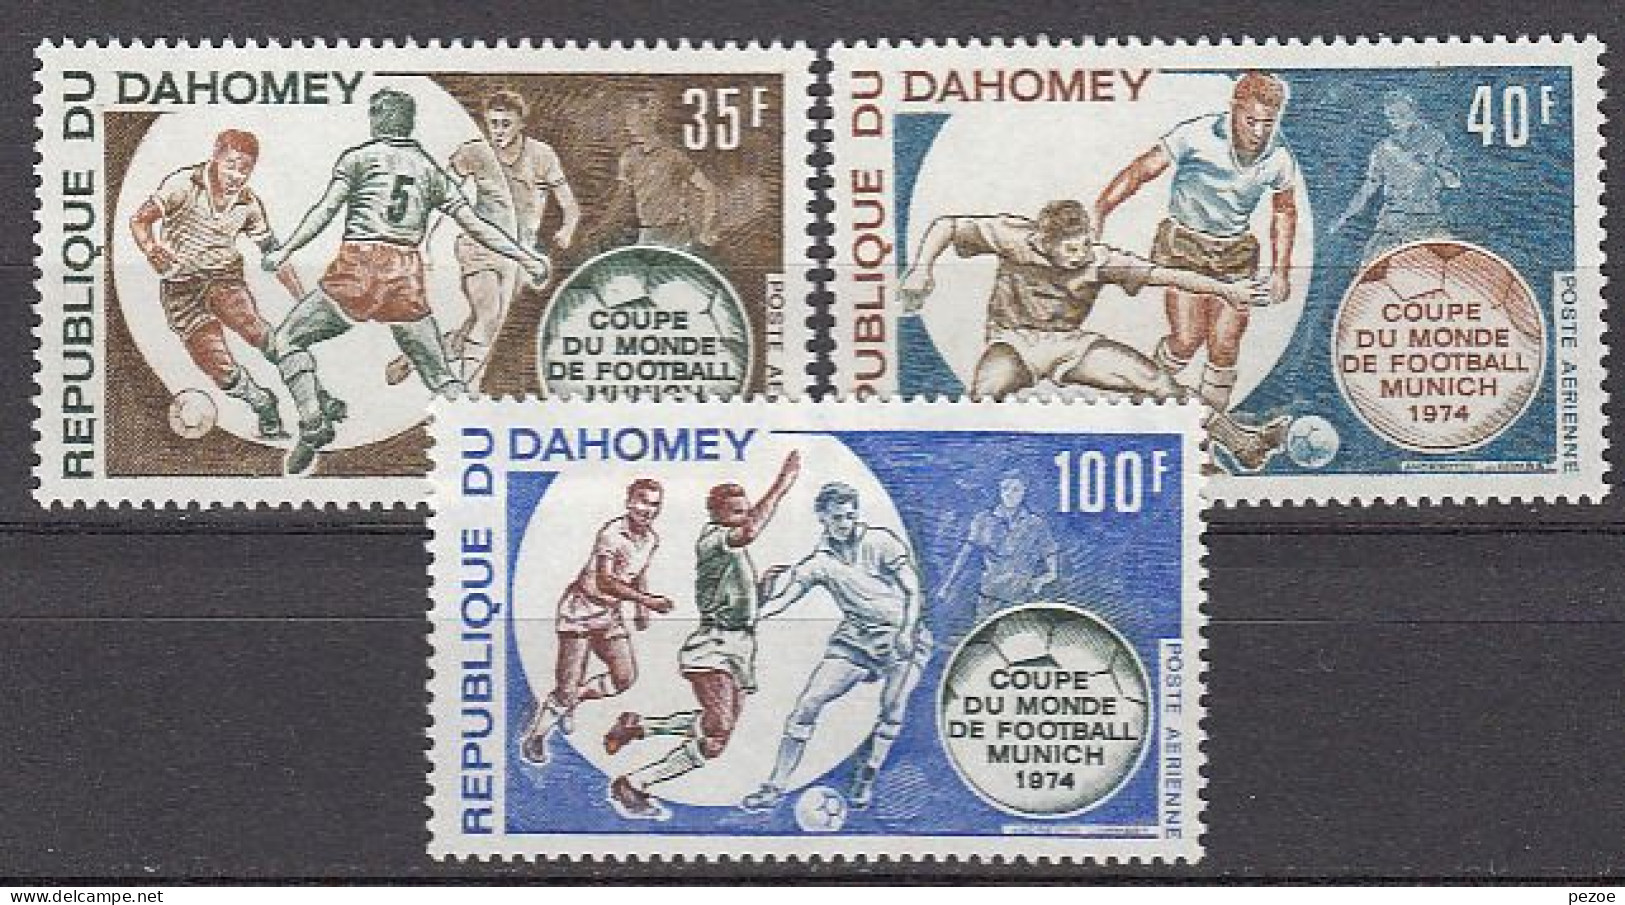 Football / Soccer / Fussball - WM 1974: Dahomey  3 W ** - 1974 – West Germany